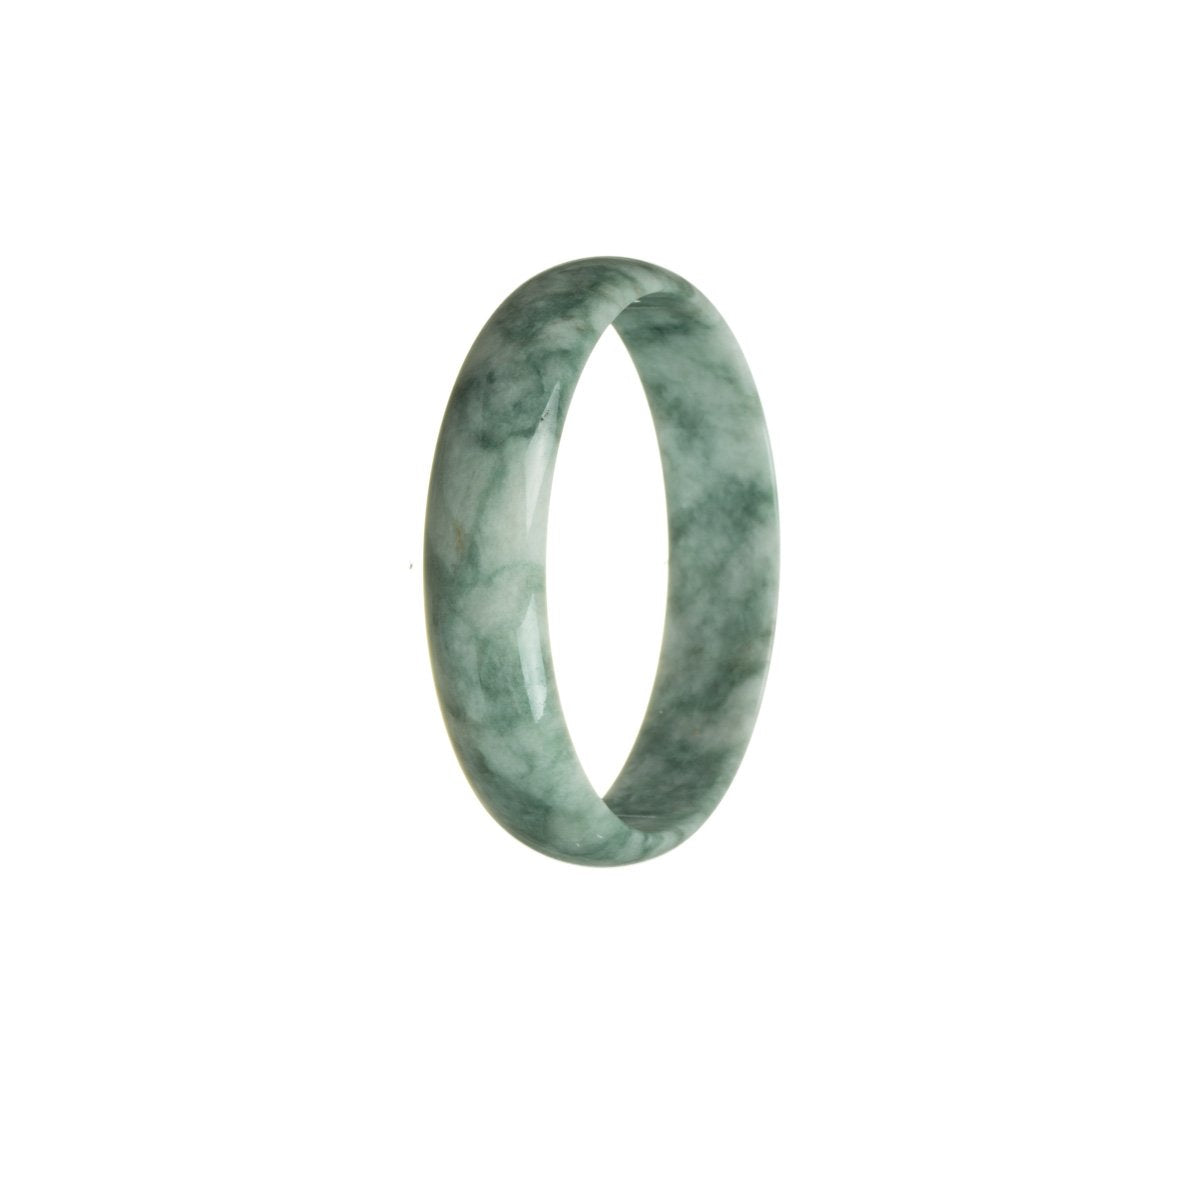 51mm Jadeite Jade Bangle Bracelet